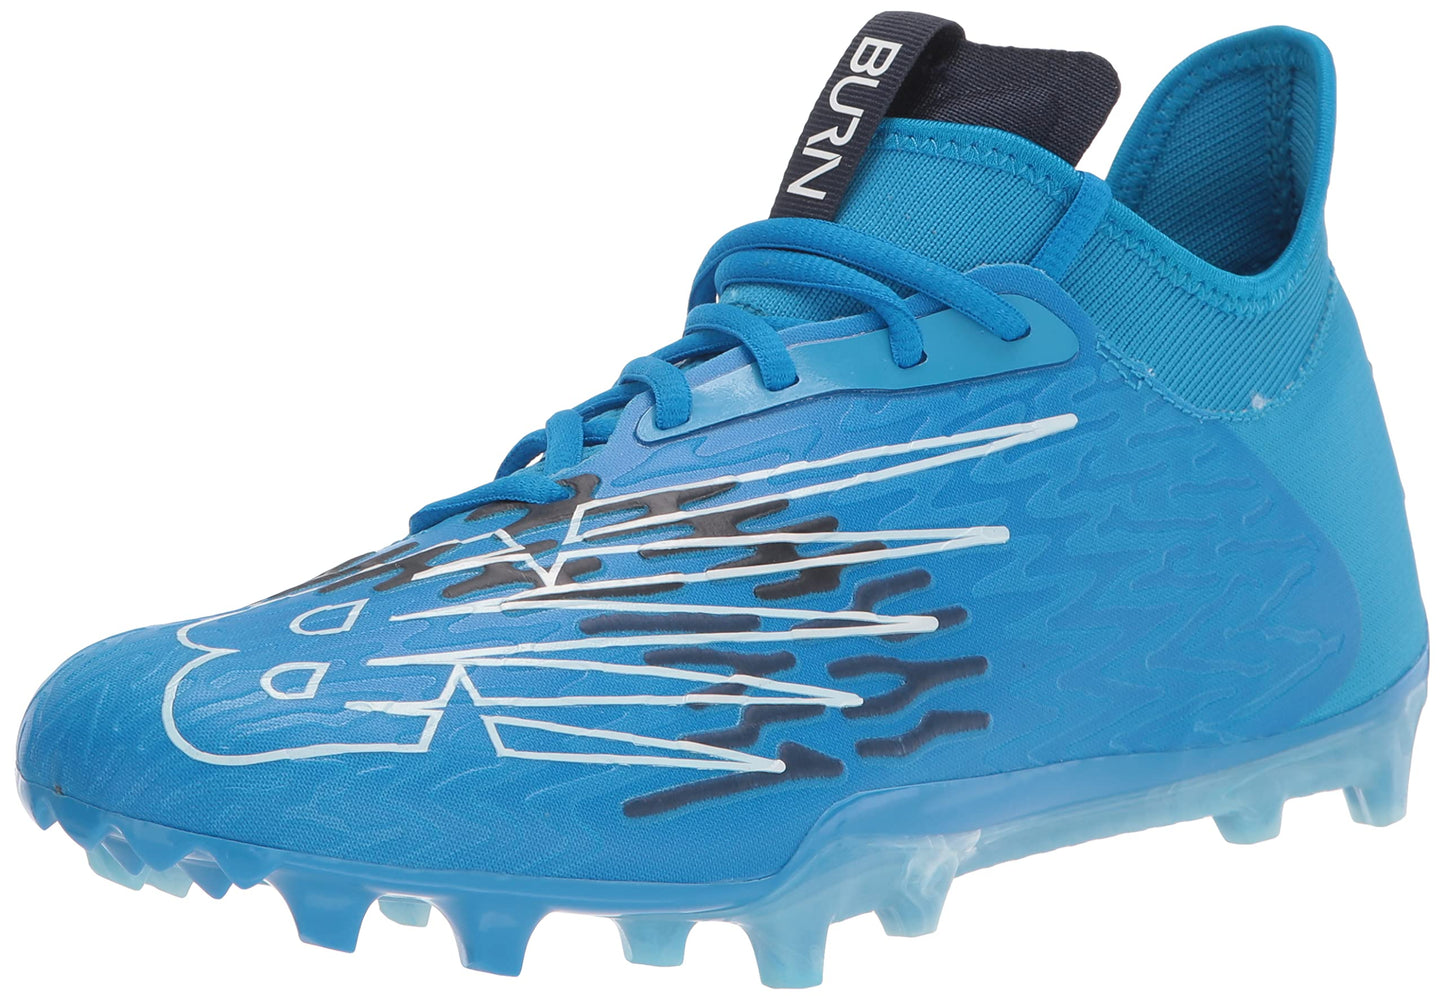 New Balance Men's Burn X 3 Speed Lacrosse Shoe, Blue/White, 6.5 US